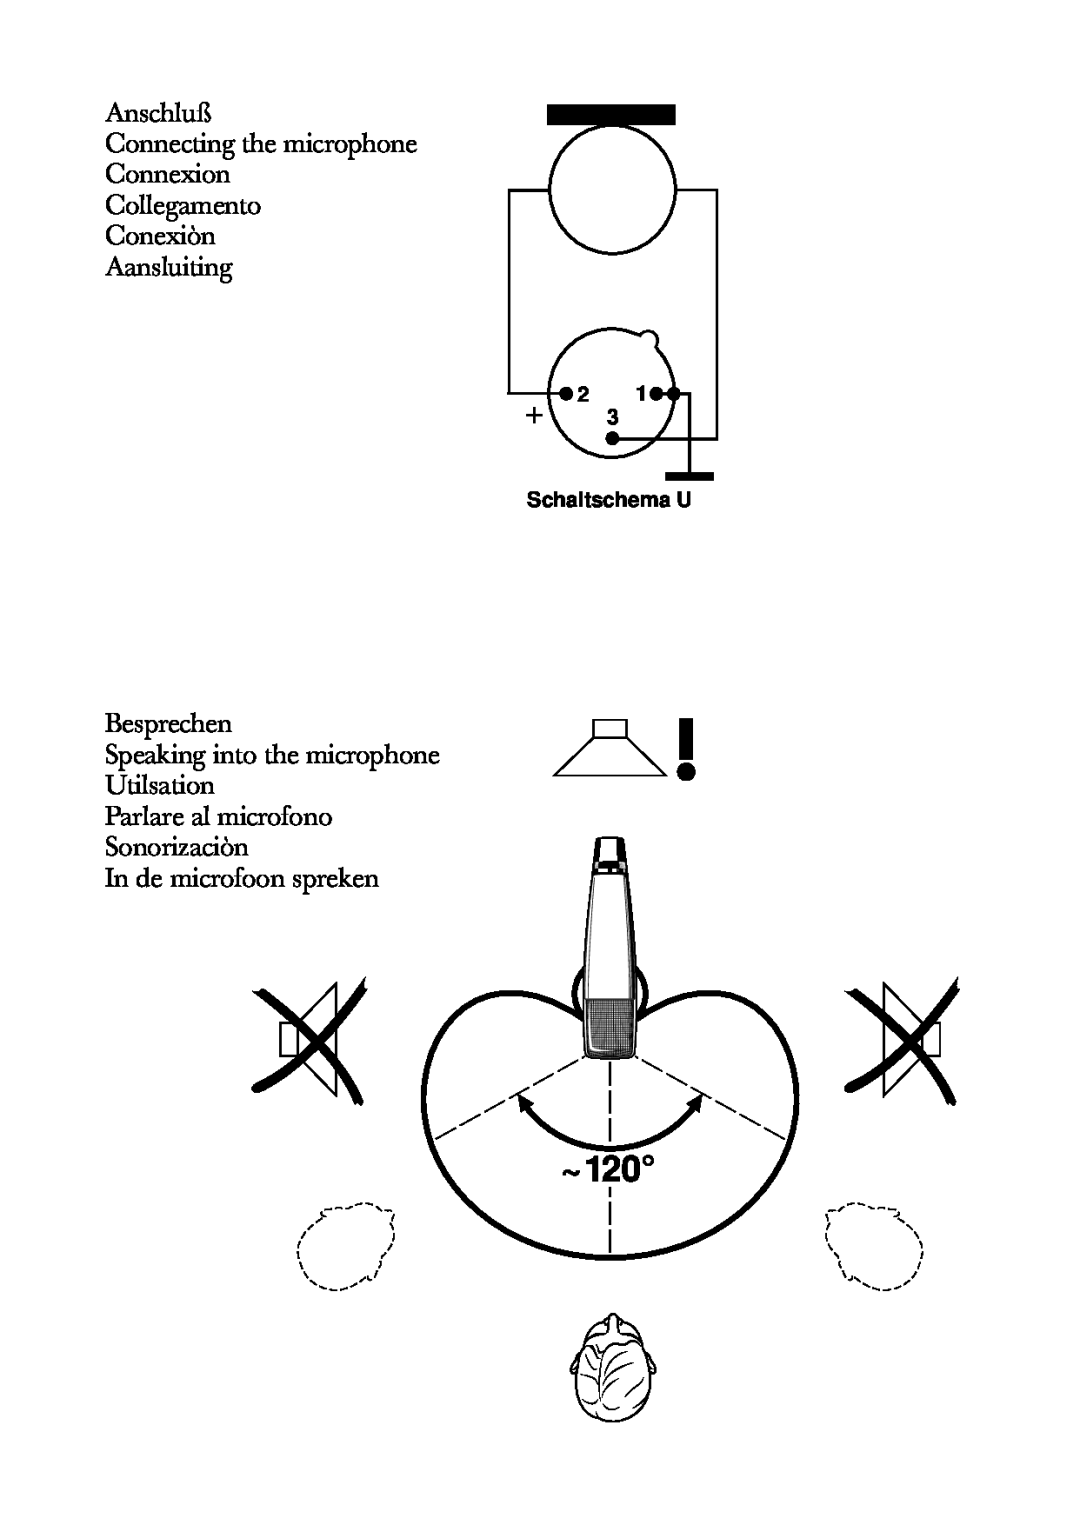 Sennheiser BF 521-II manual Anschluß Connecting the microphone Connexion Collegamento Conexiòn, Aansluiting, Schaltschema U 